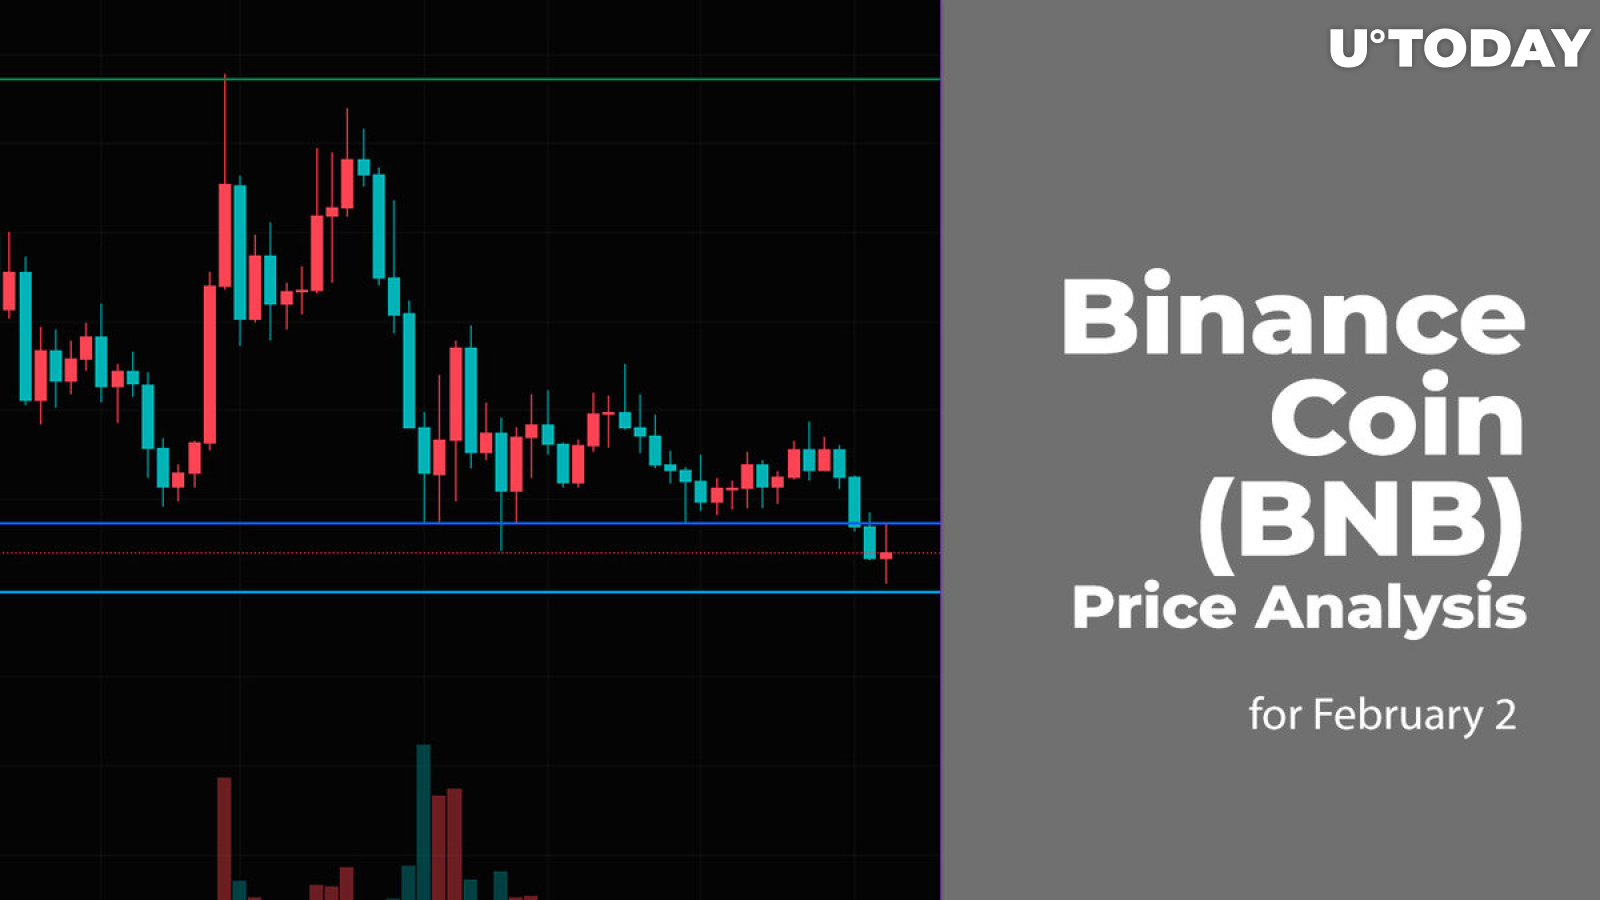 Binance Coin (BNB) Price Analysis for February 2